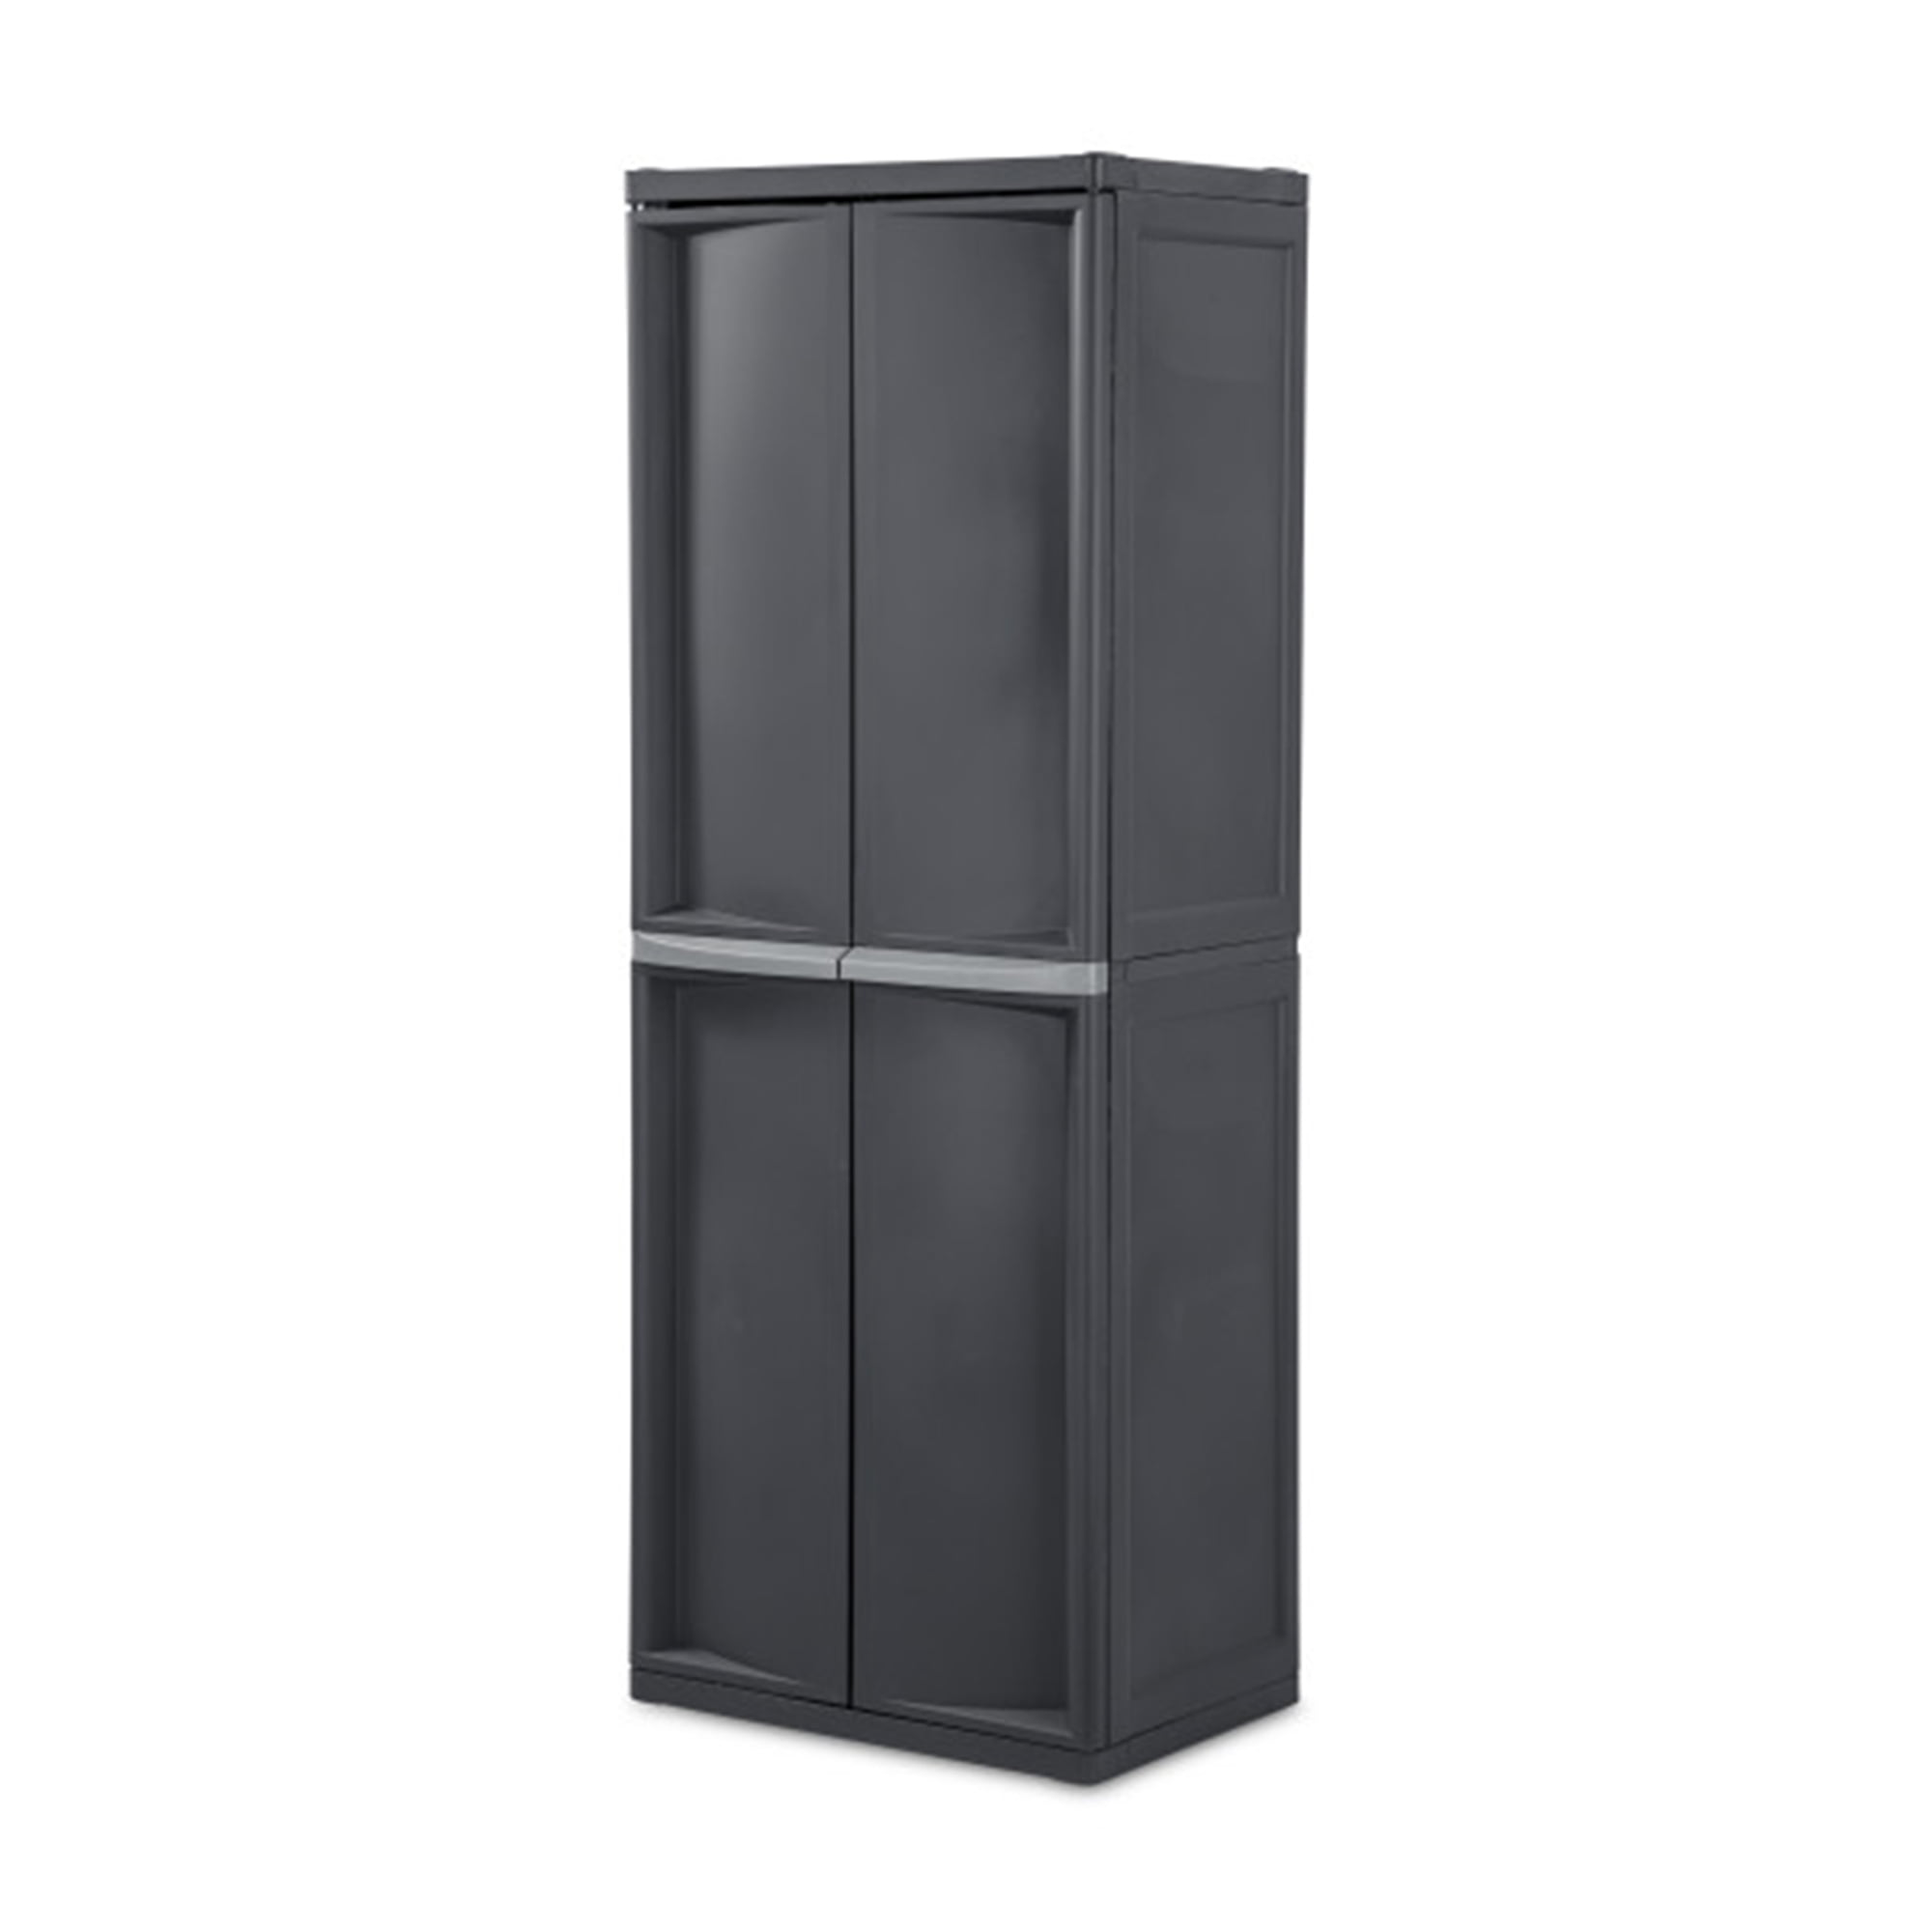 Sterilite Adjule 4 Shelf Storage Cabinet With Doors Gray 01423v01 Com